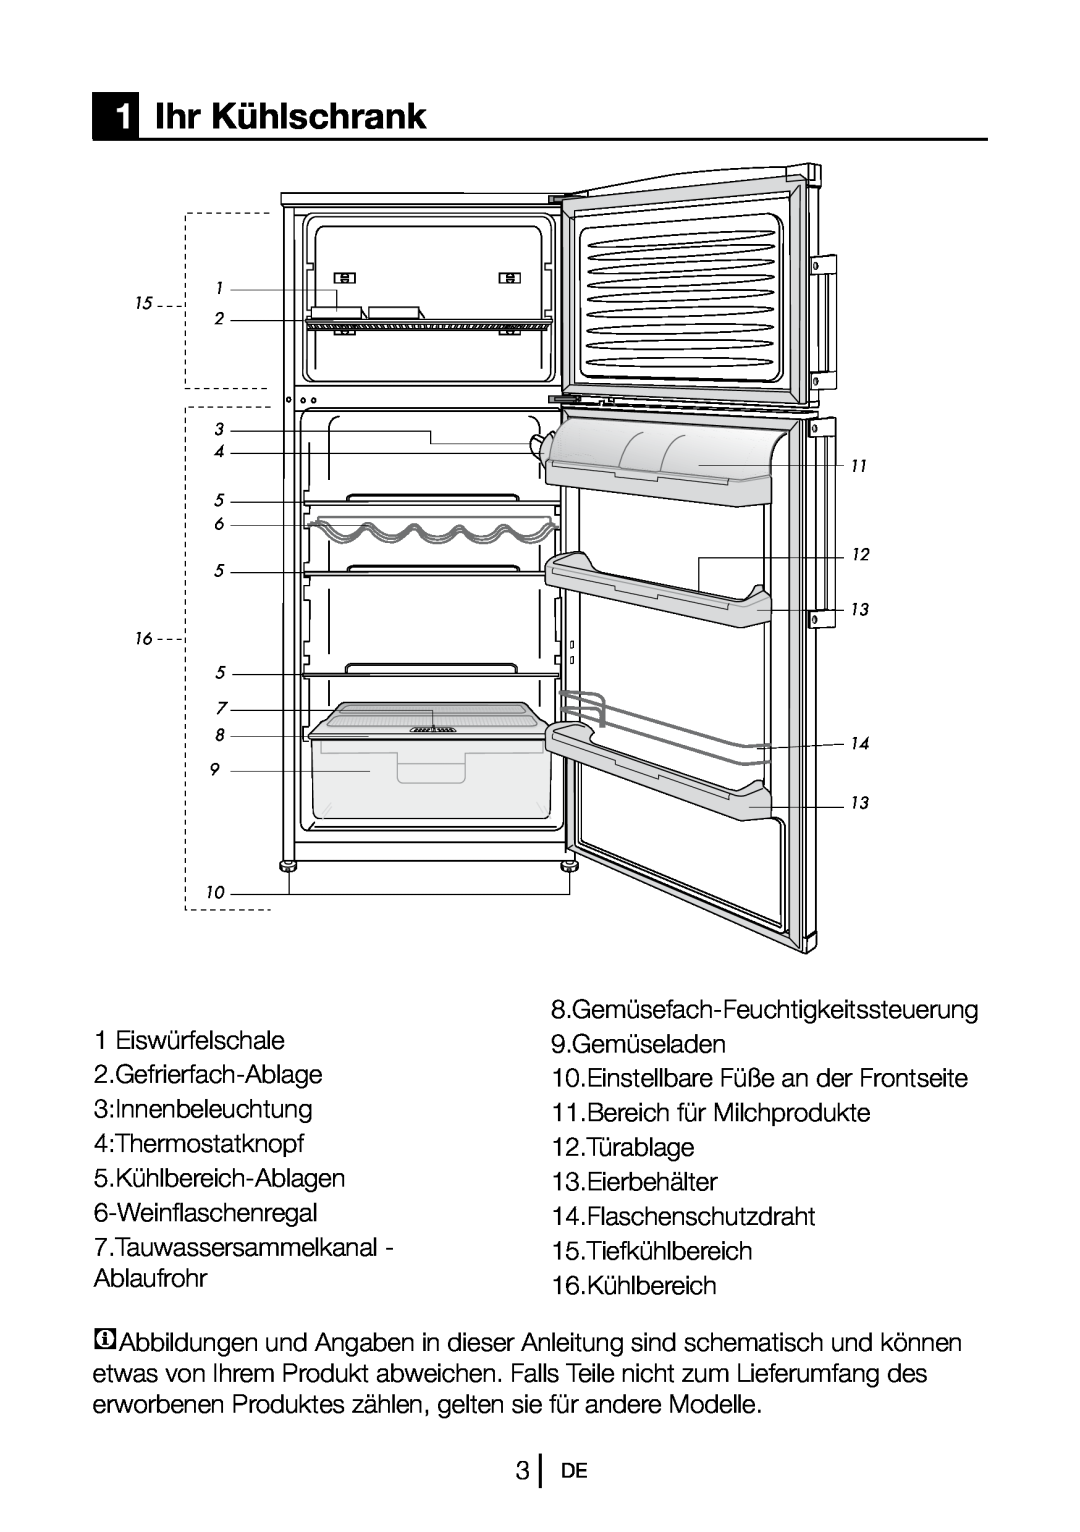 Blomberg DSM 9651 A+ manual 1Ihr Kühlschrank 